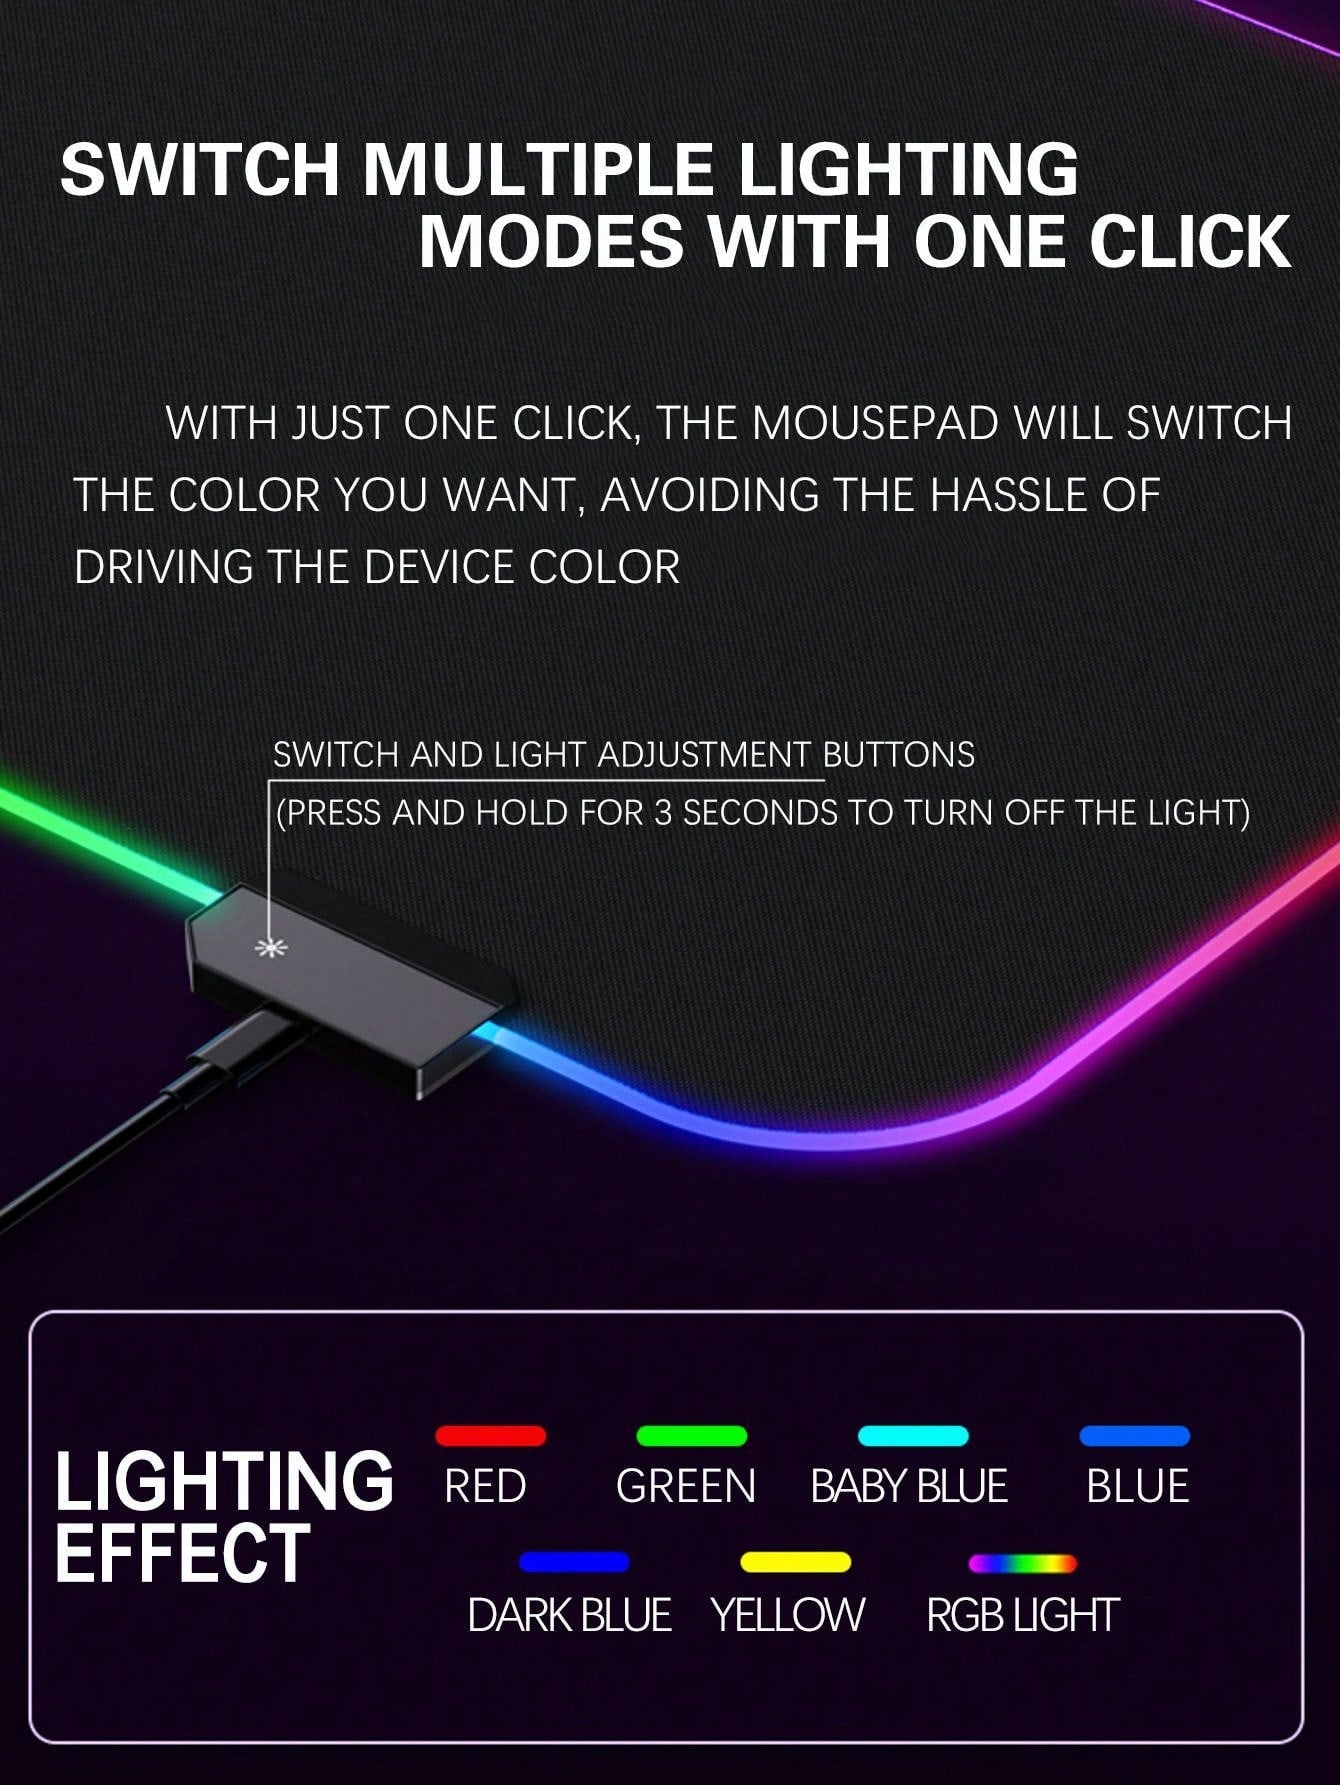 Large RGB Gaming Mouse Pad slip Resistant